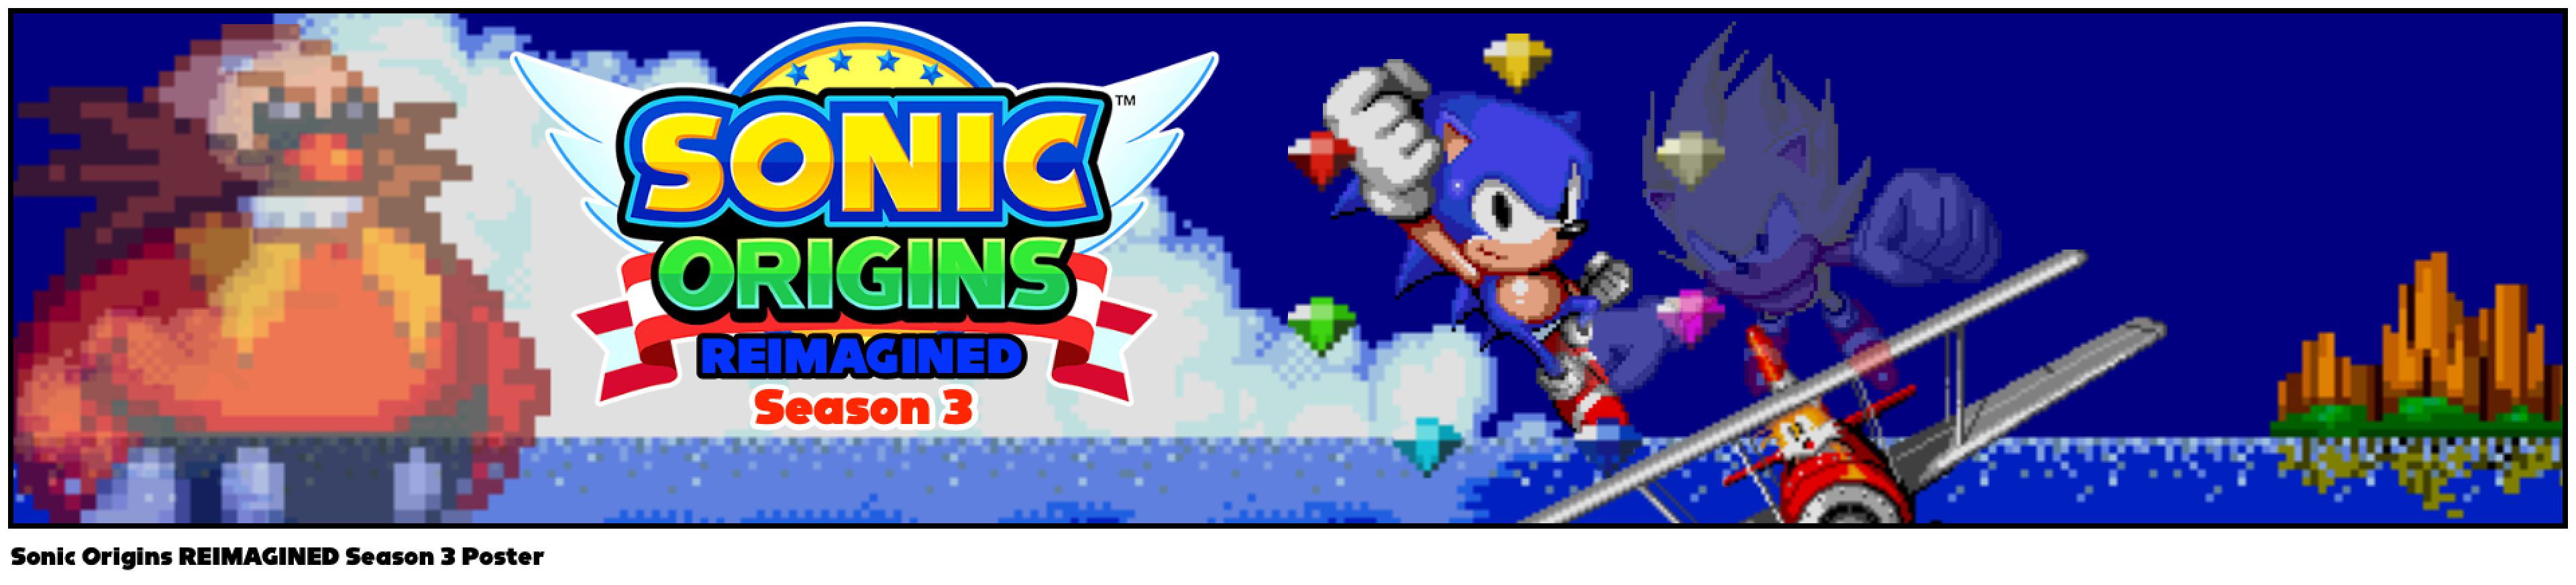 Sonic Origins REIMAGINED Season 3 Poster